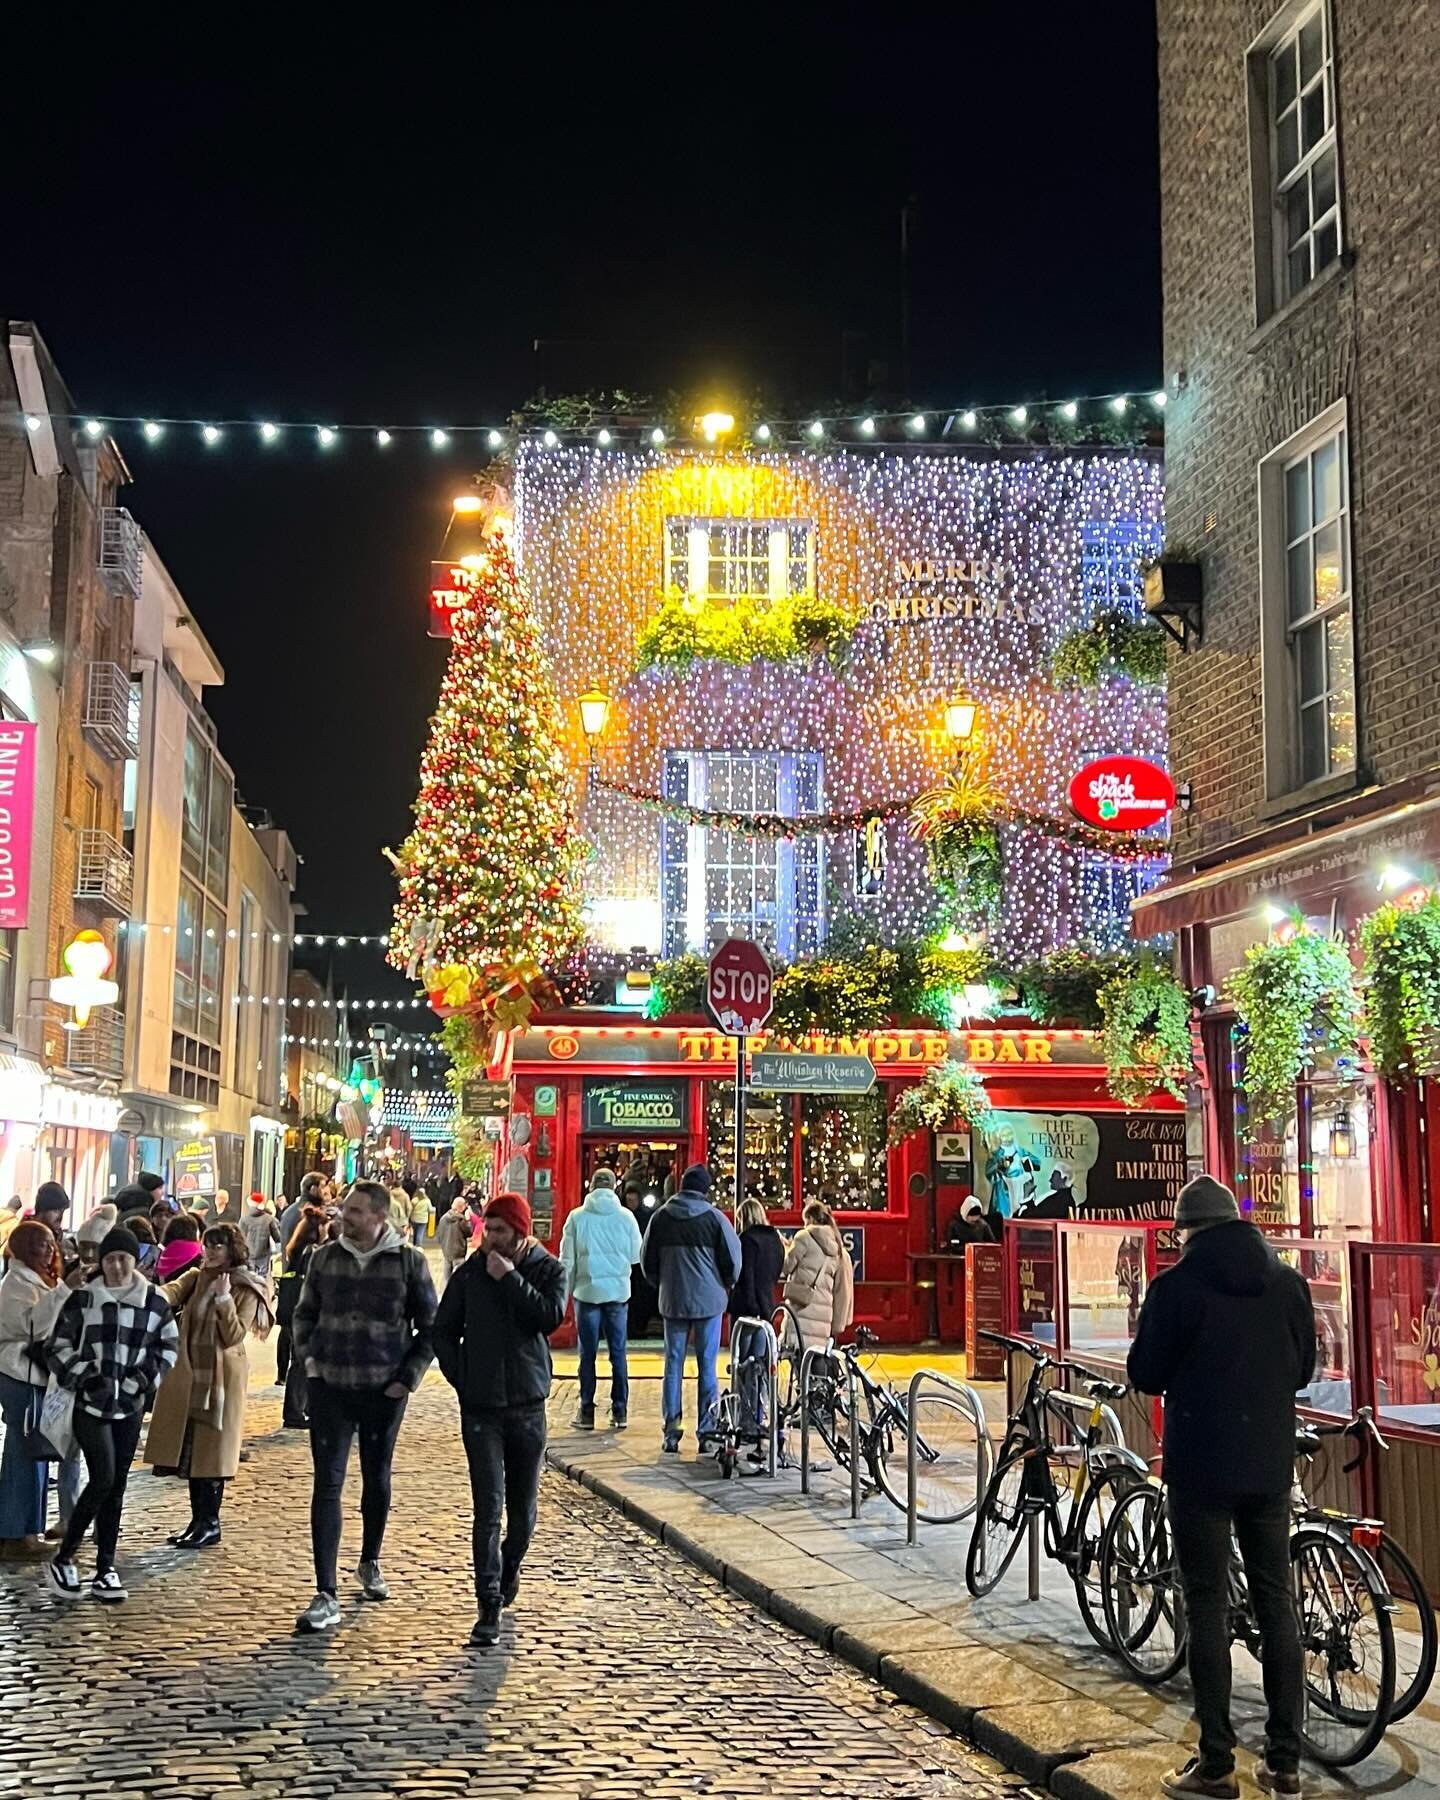 Christmas-time in Dublin 🎄☘️

.
.
.
.
.
.
.
.
#dublin #ireland #emeraldcoast #christmasindublin #travelphotography #lifestylephotographer #europe_vacations #dublinireland #travelphotography